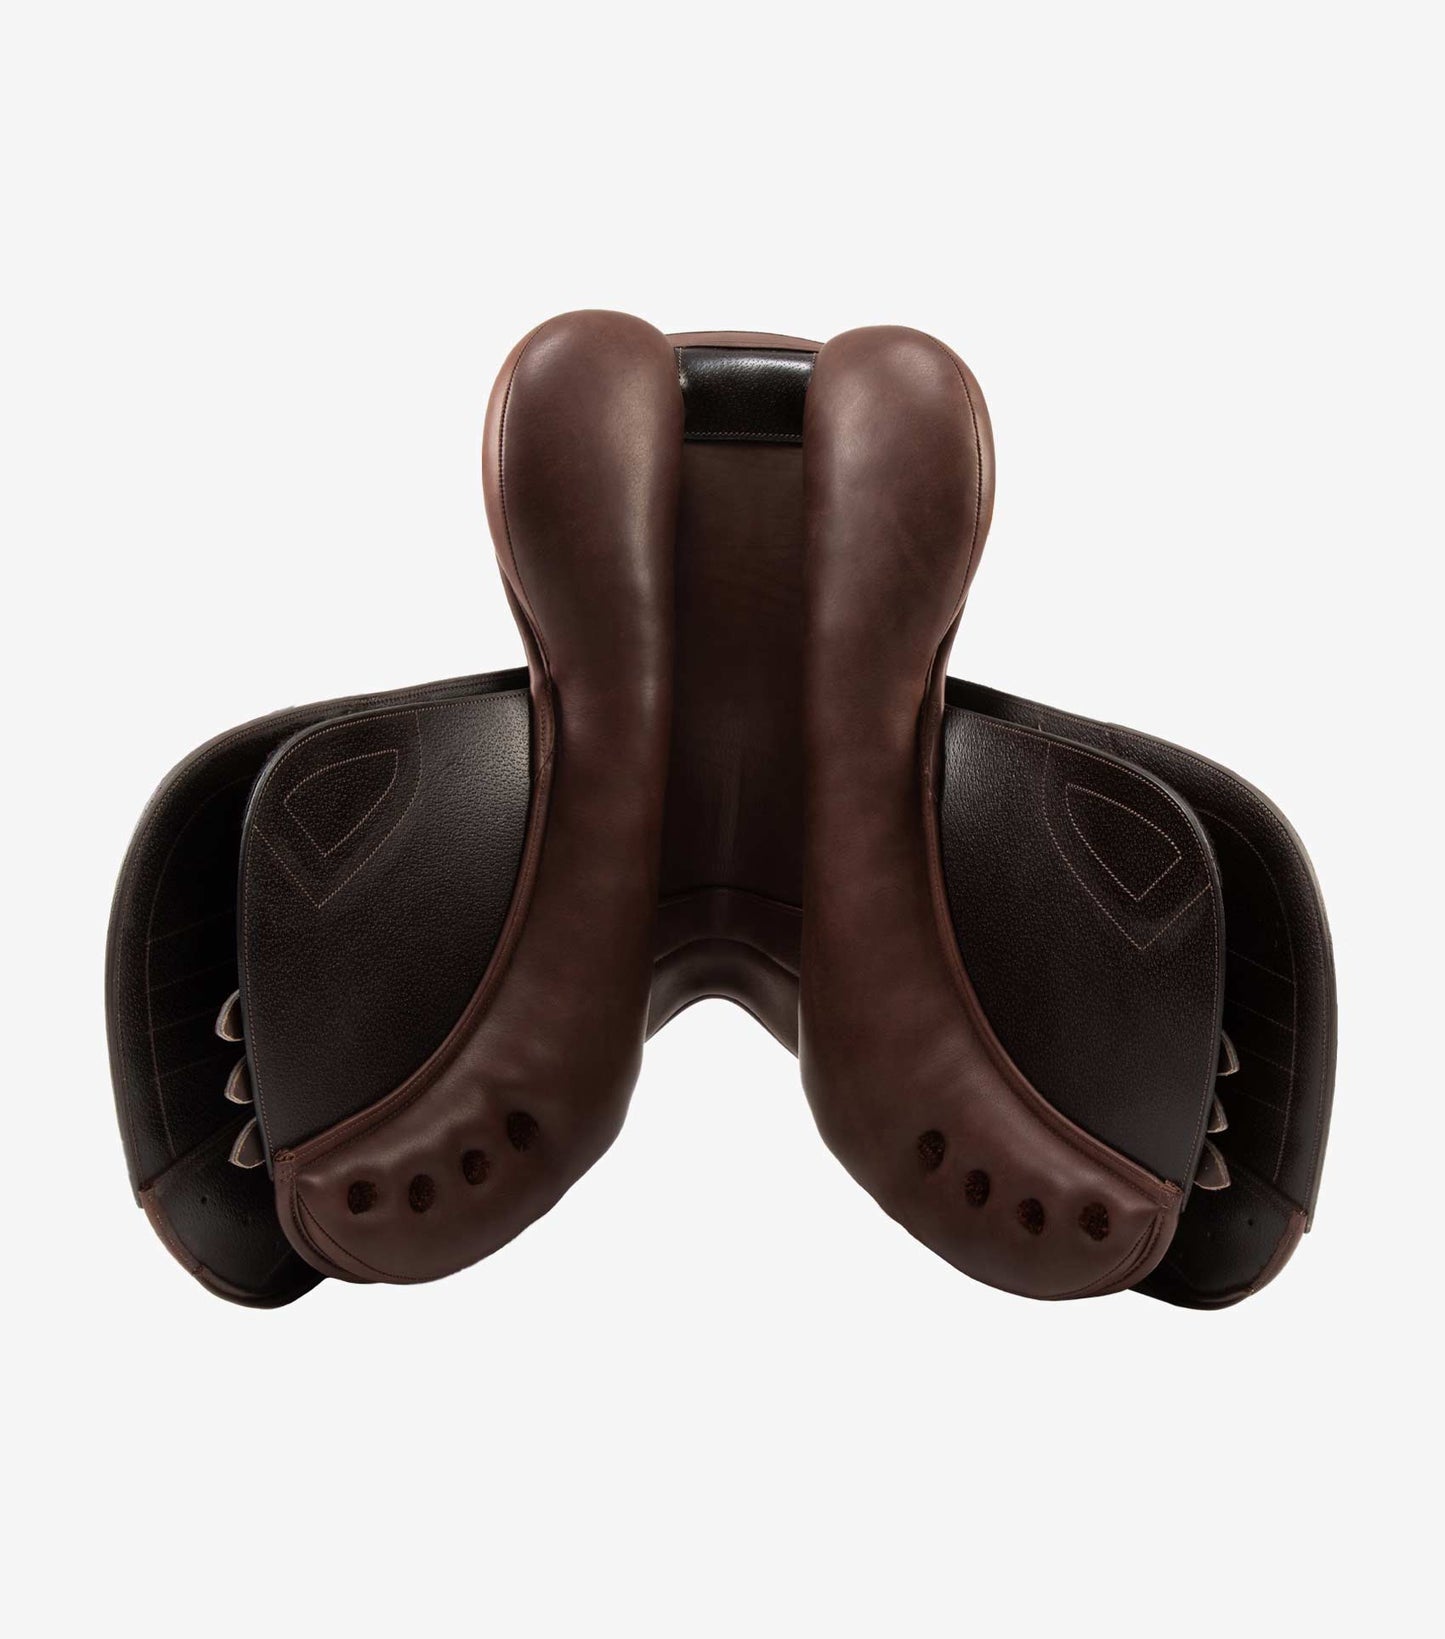 Premier Equine Chamonix Leather Close Contact Jump Saddle (Brown)